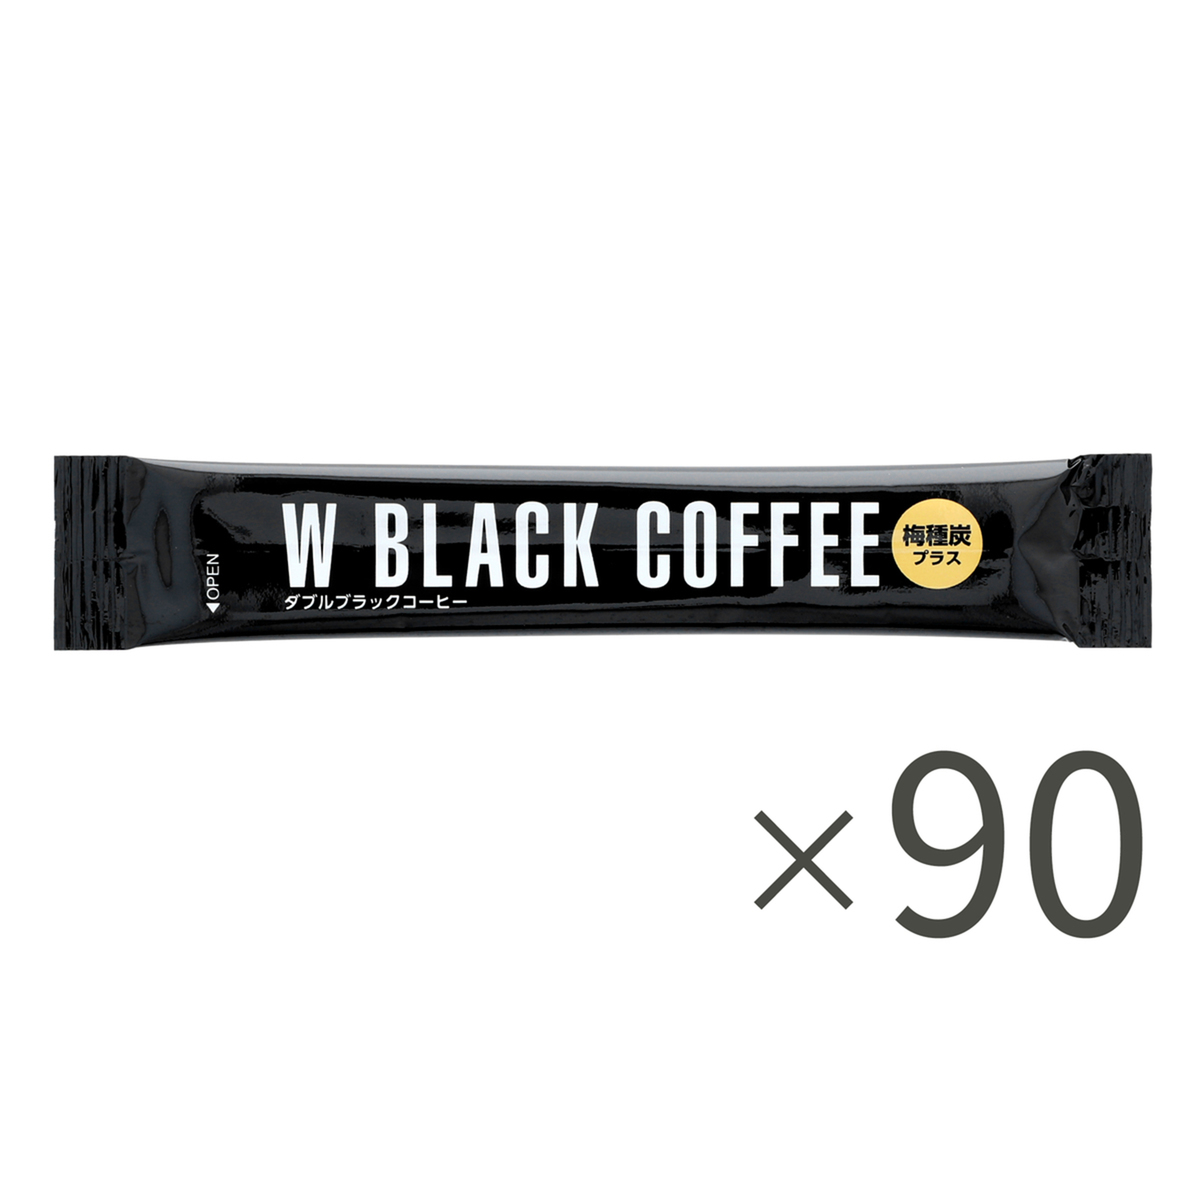 Wブラックコーヒー90本(ご予約品)